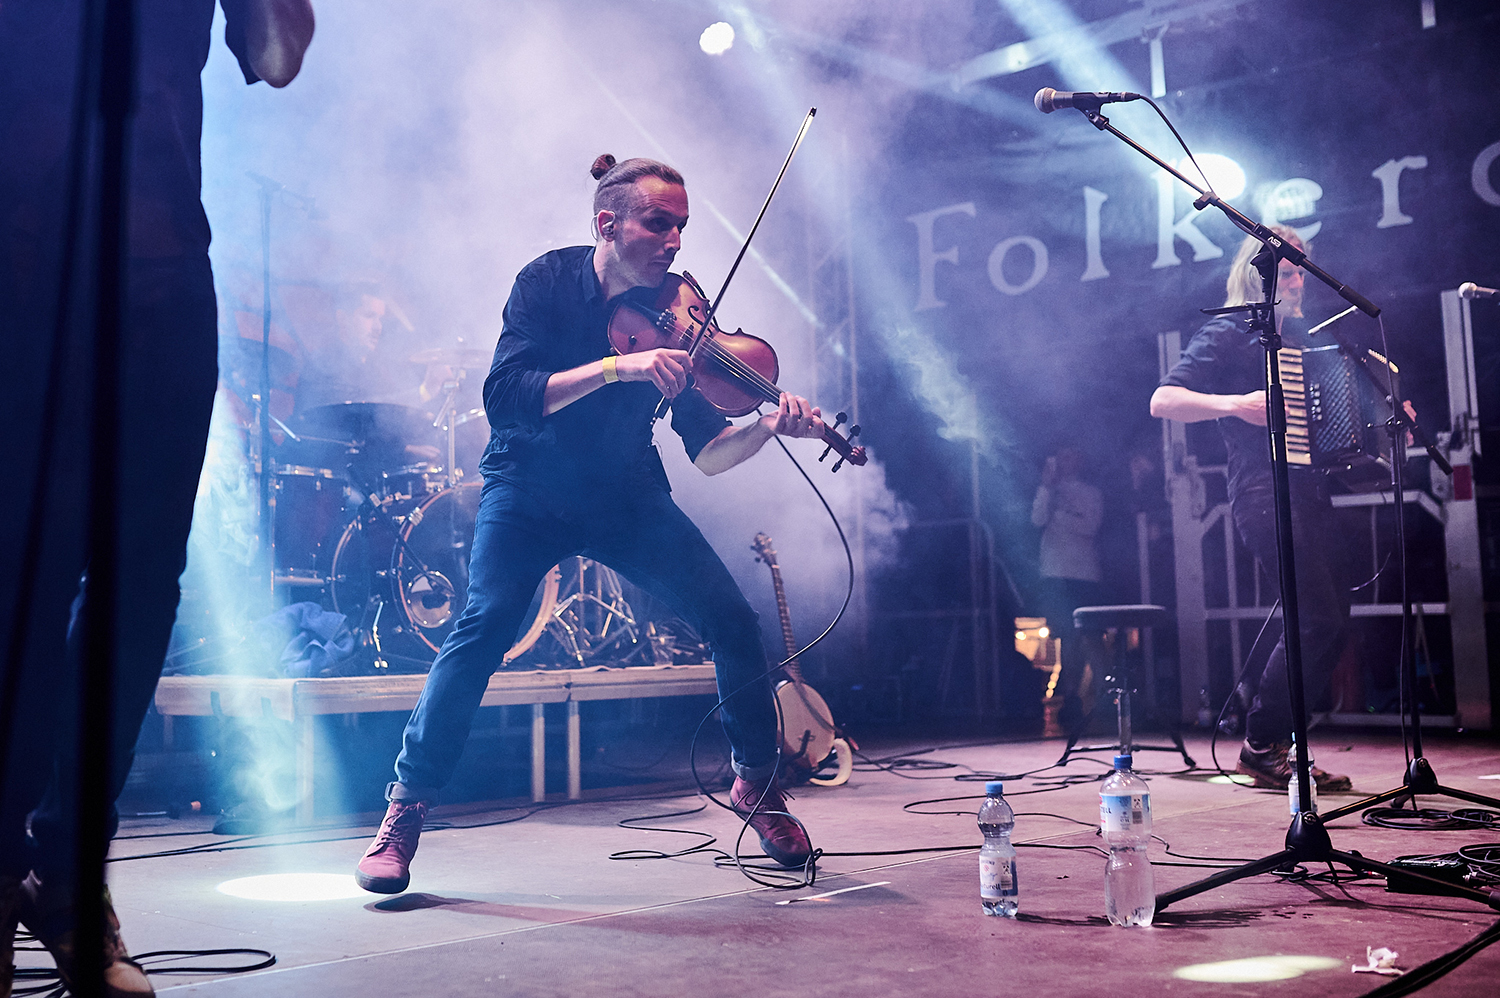 Folkerdey-Festival-2022, Foto: Andreas Heller